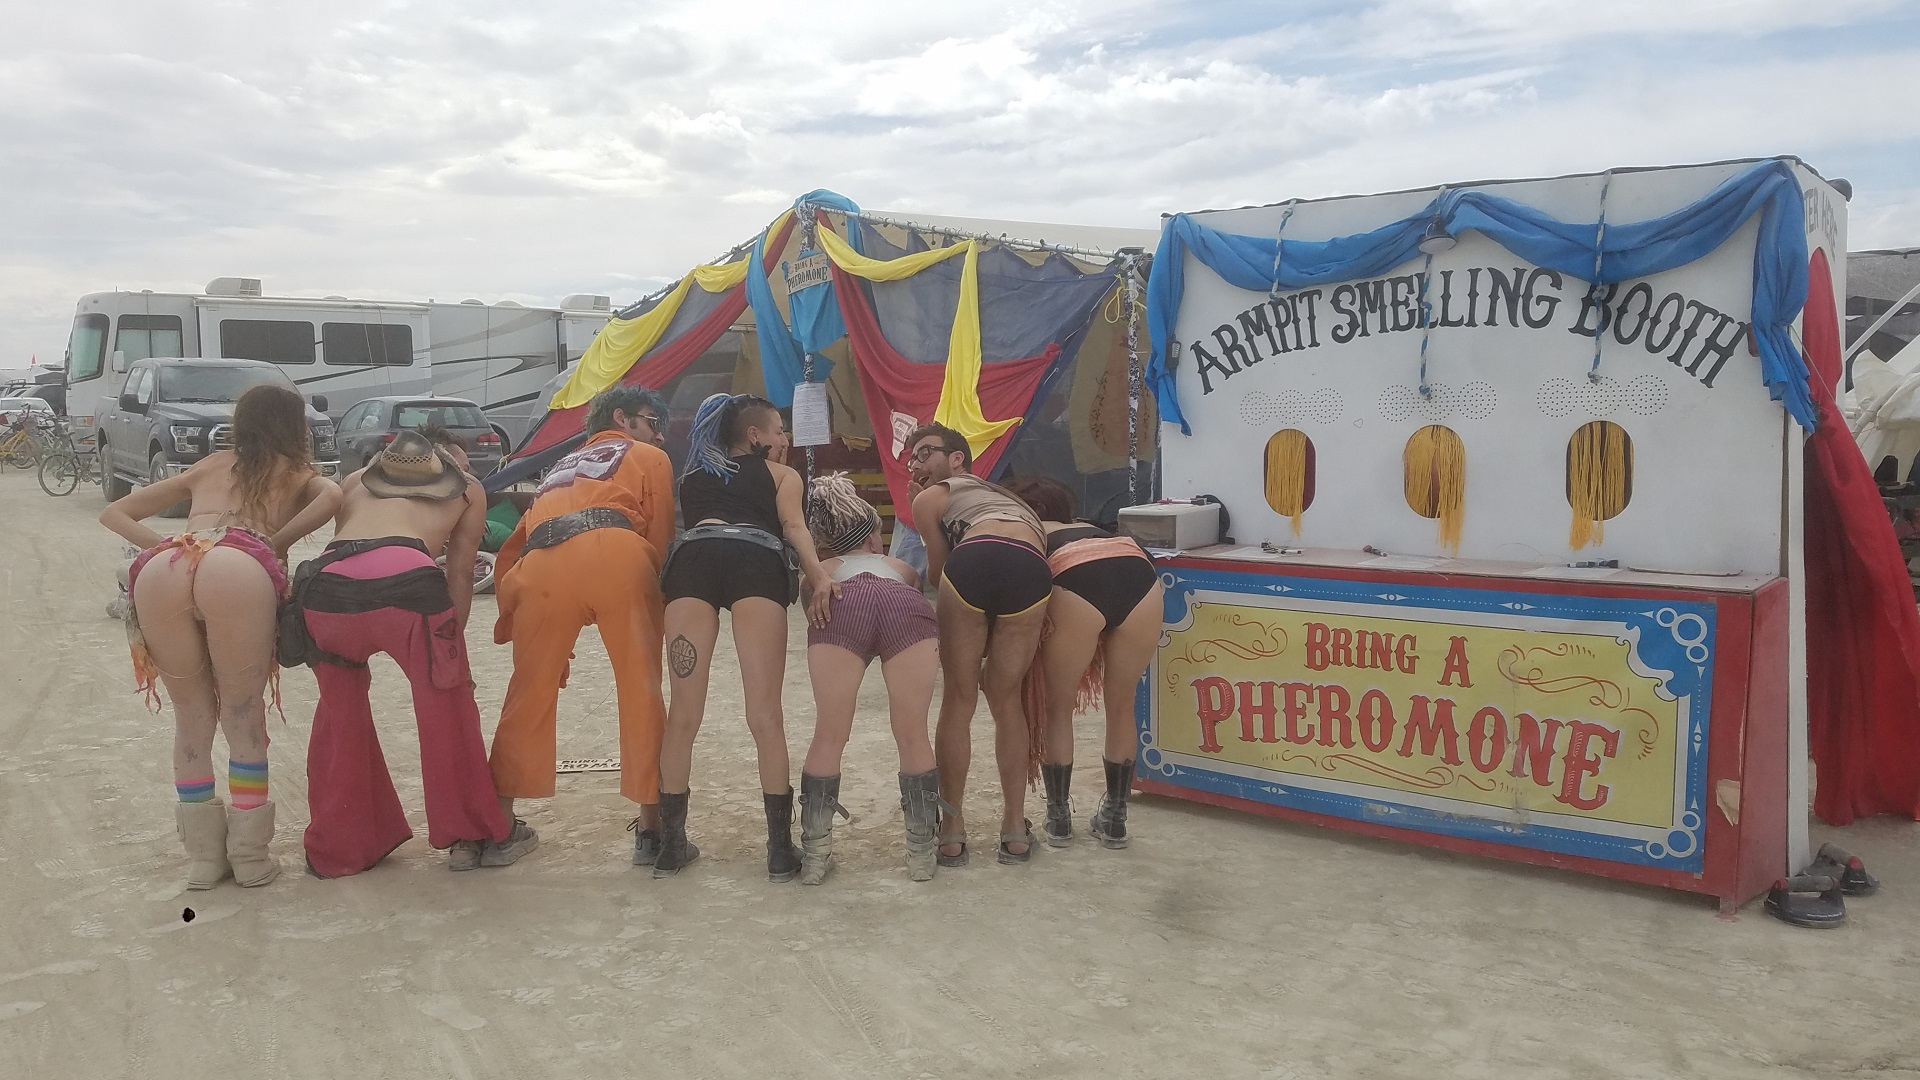 claudio mammarella recommends Burning Man Glory Hole